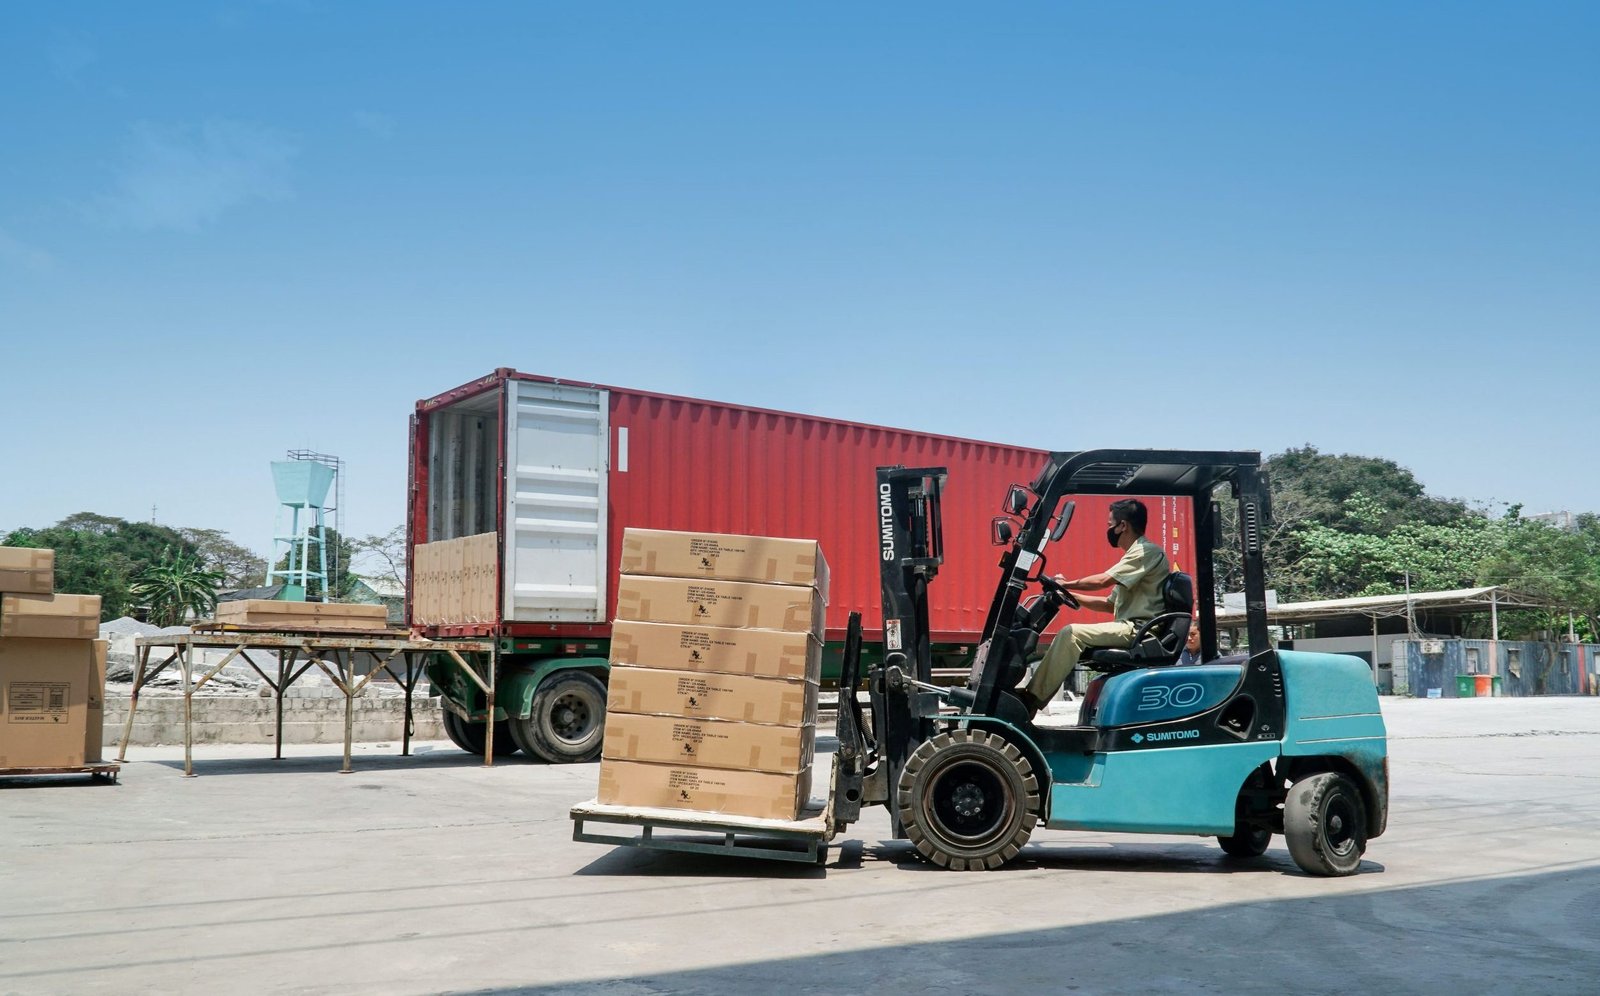 Pengertian Container Freight Station (CFS)